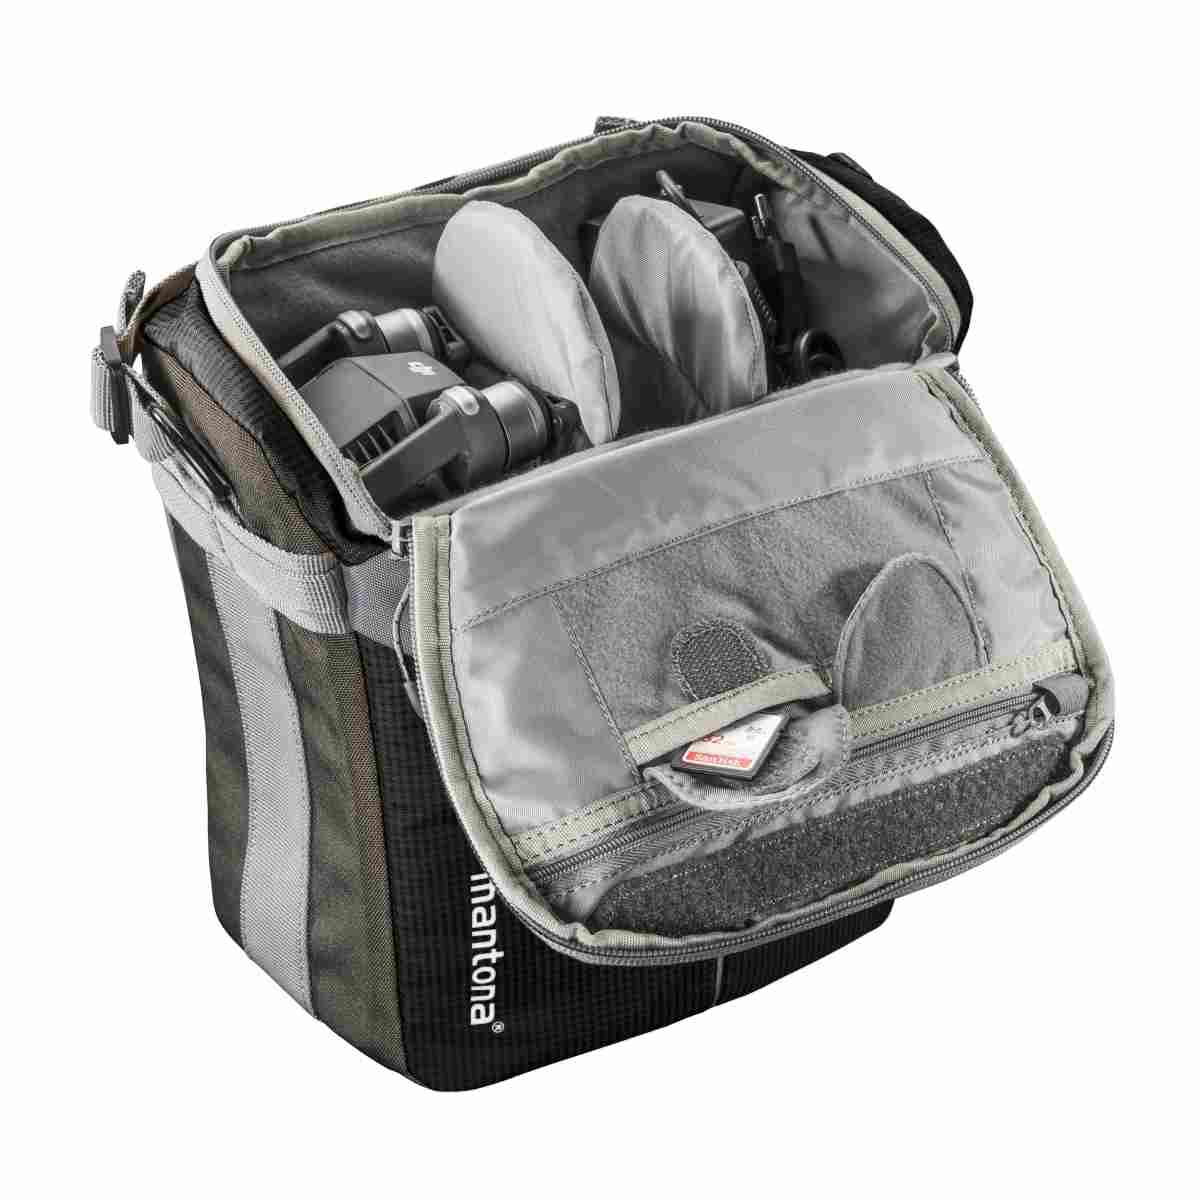 Mantona Elements Outdoor Backpack with Camera Bag